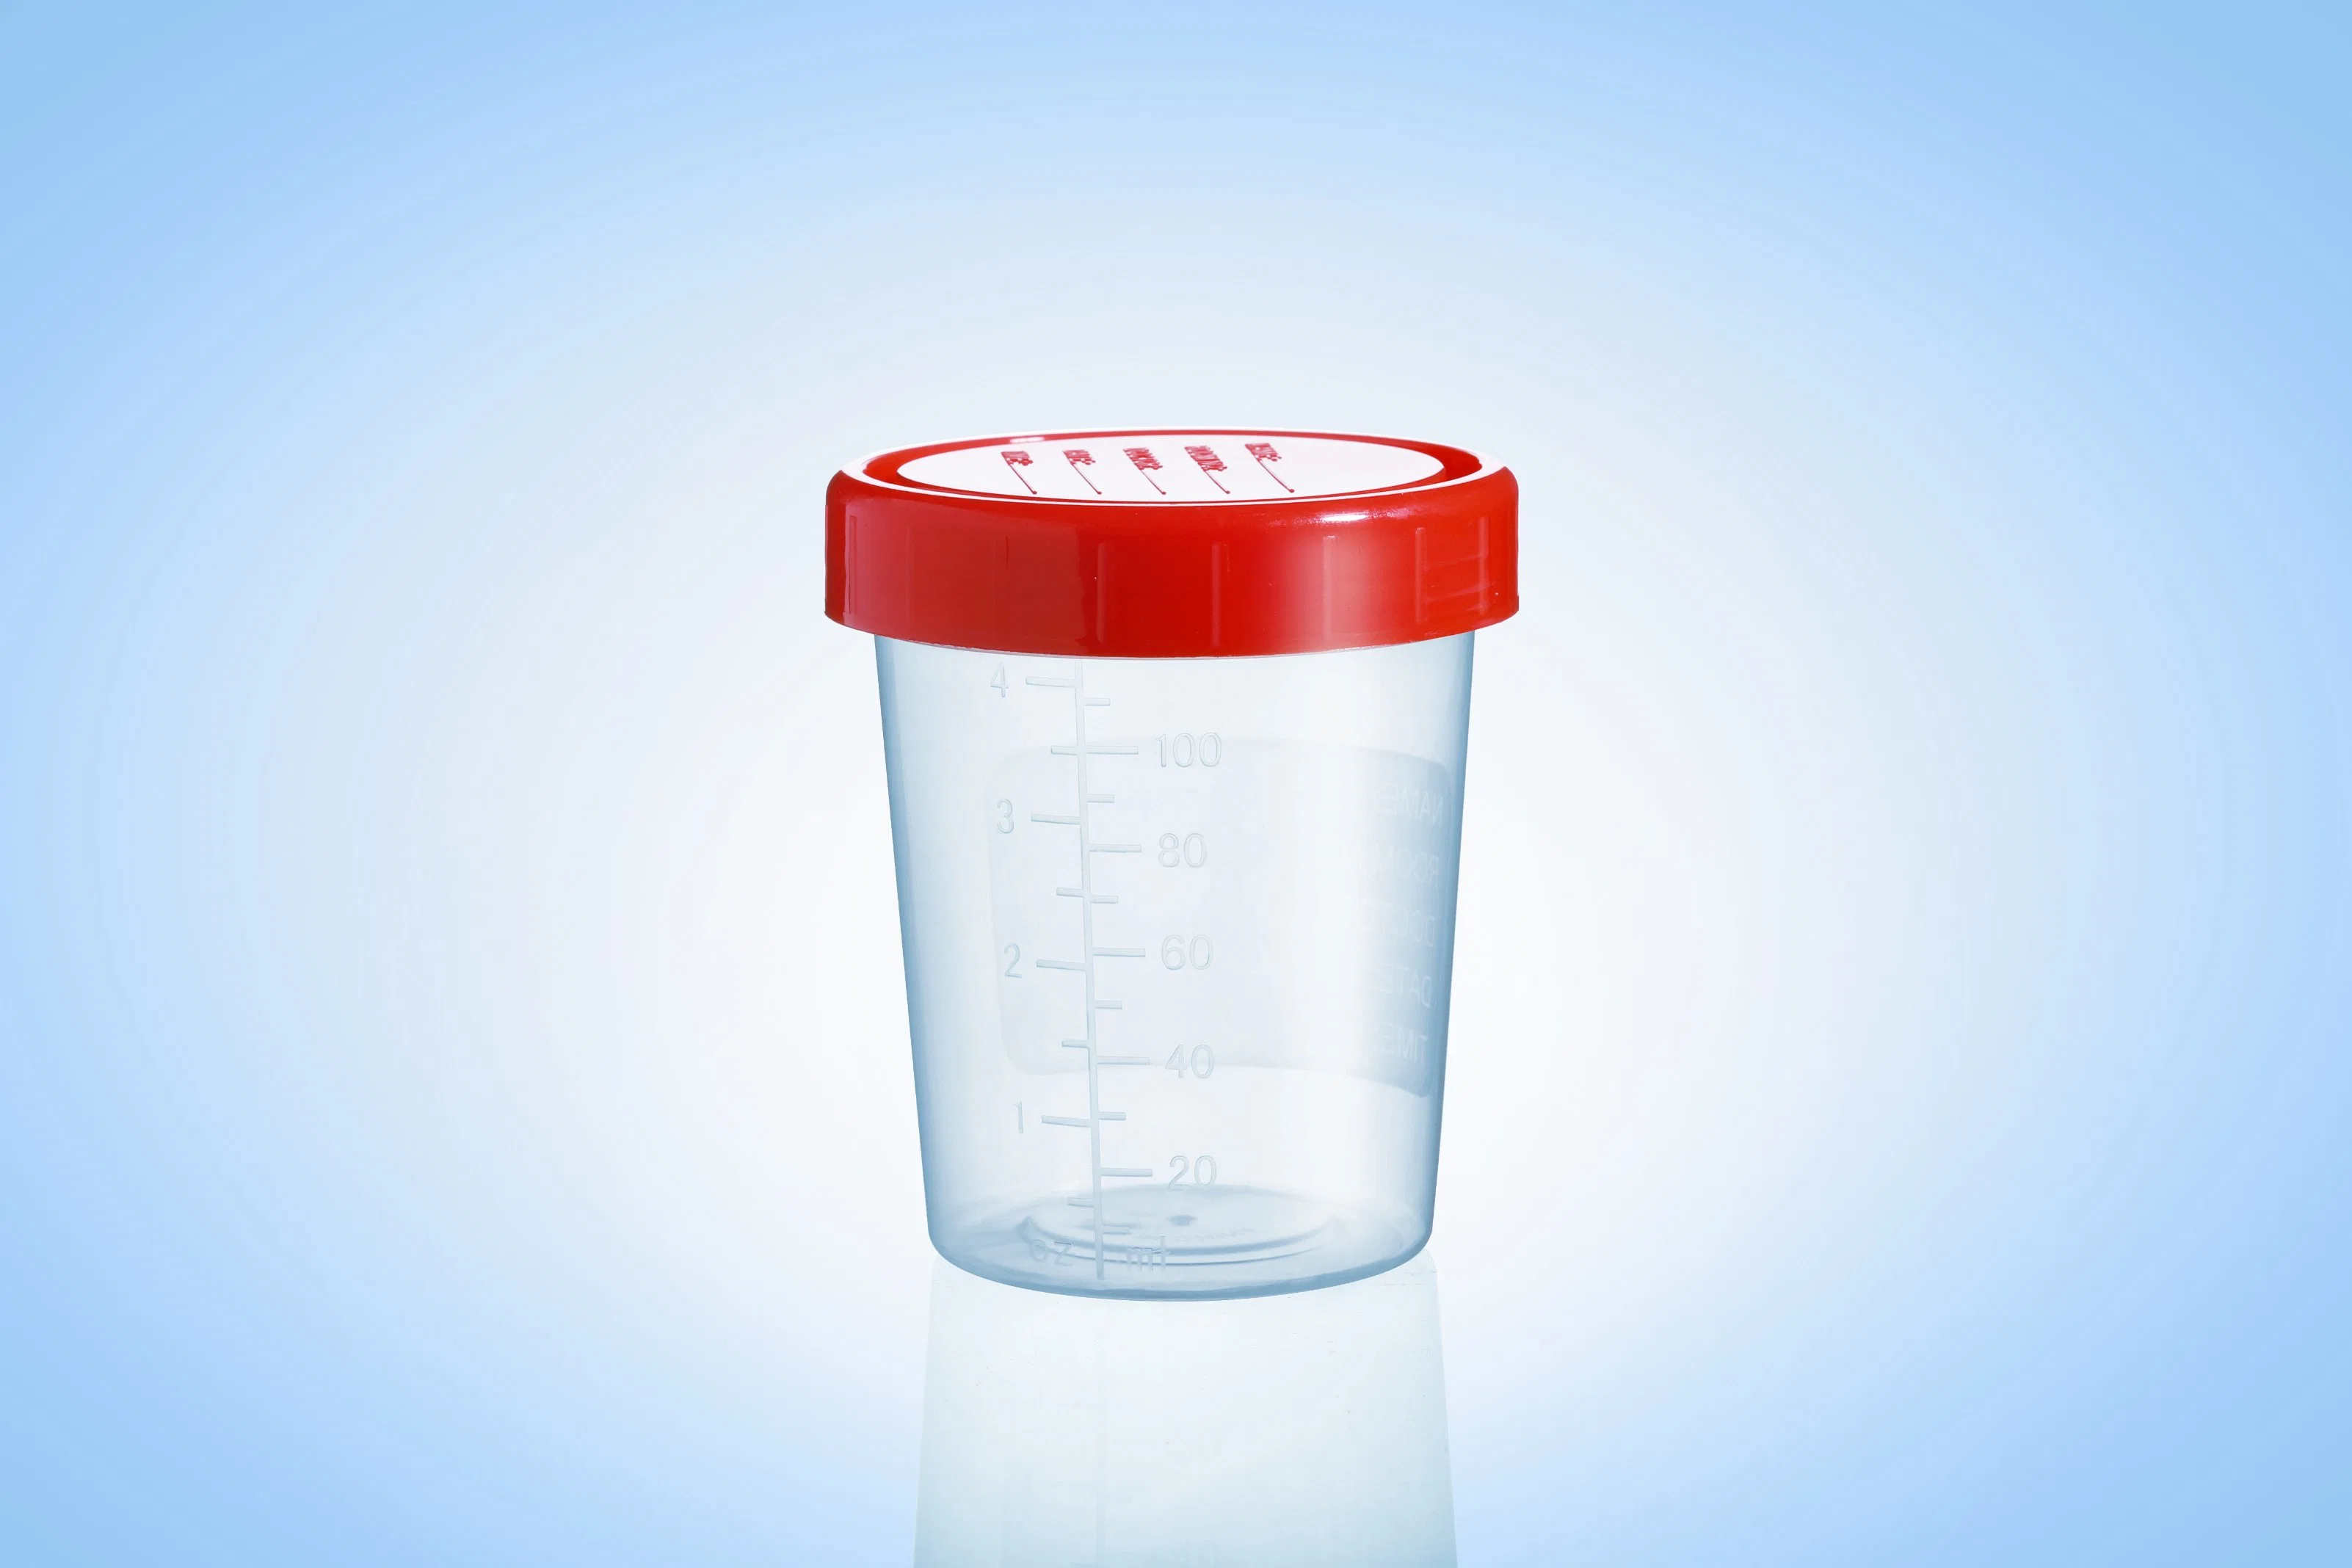 120 ml de amostra de urina descartável recipiente, material de PP